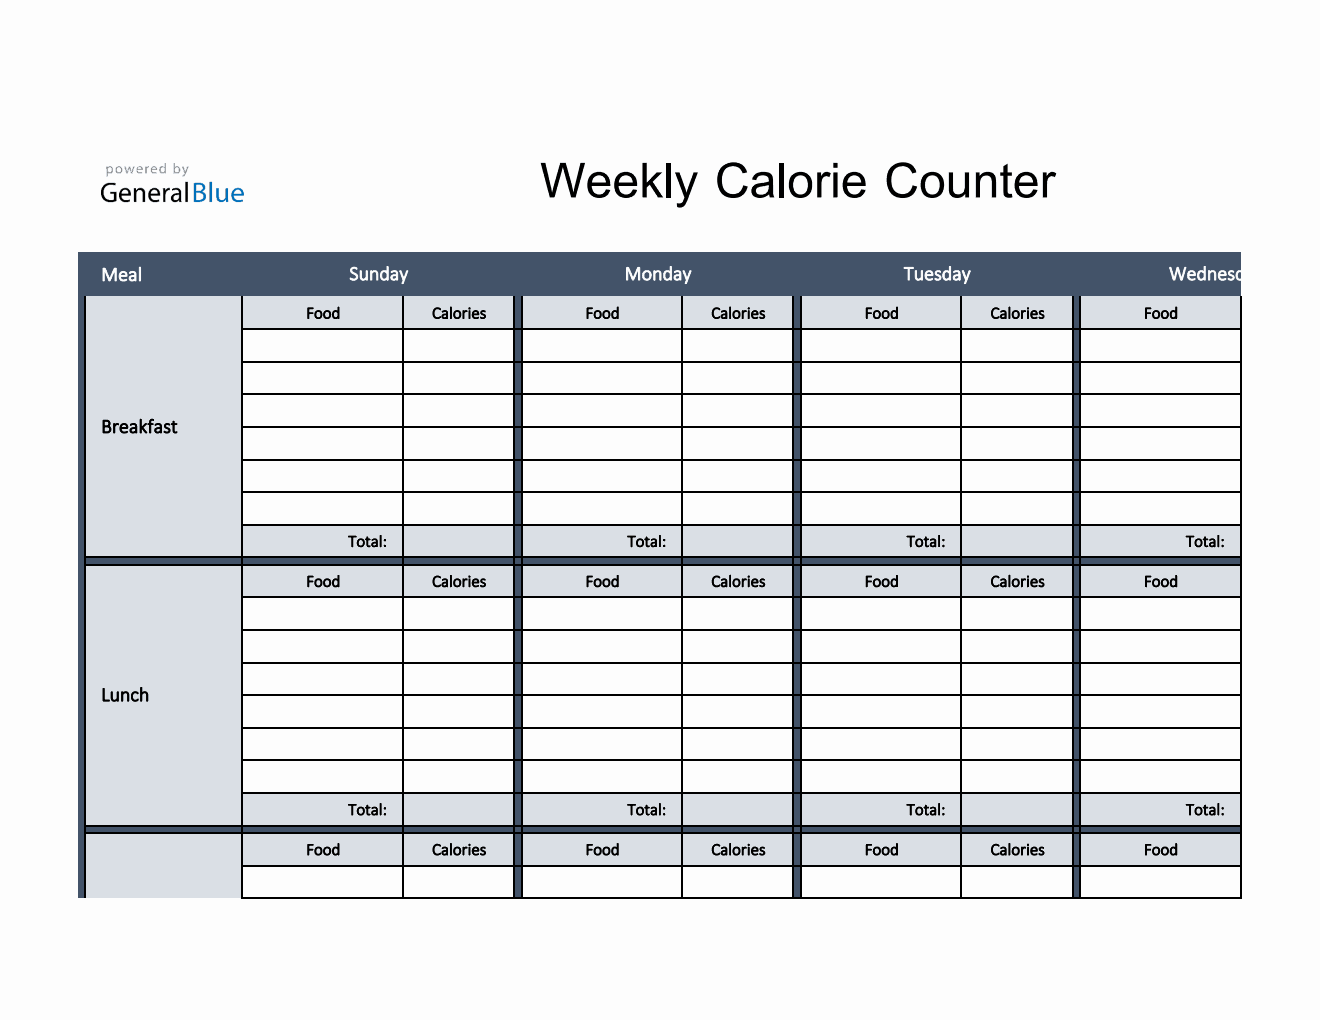 https://www.generalblue.com/weekly-calorie-tracker/p/t9gg3hm9r/f/bordered-weekly-calorie-tracker-in-excel-md.png?v=835f74879f94b0f94e41b6fc6596d502